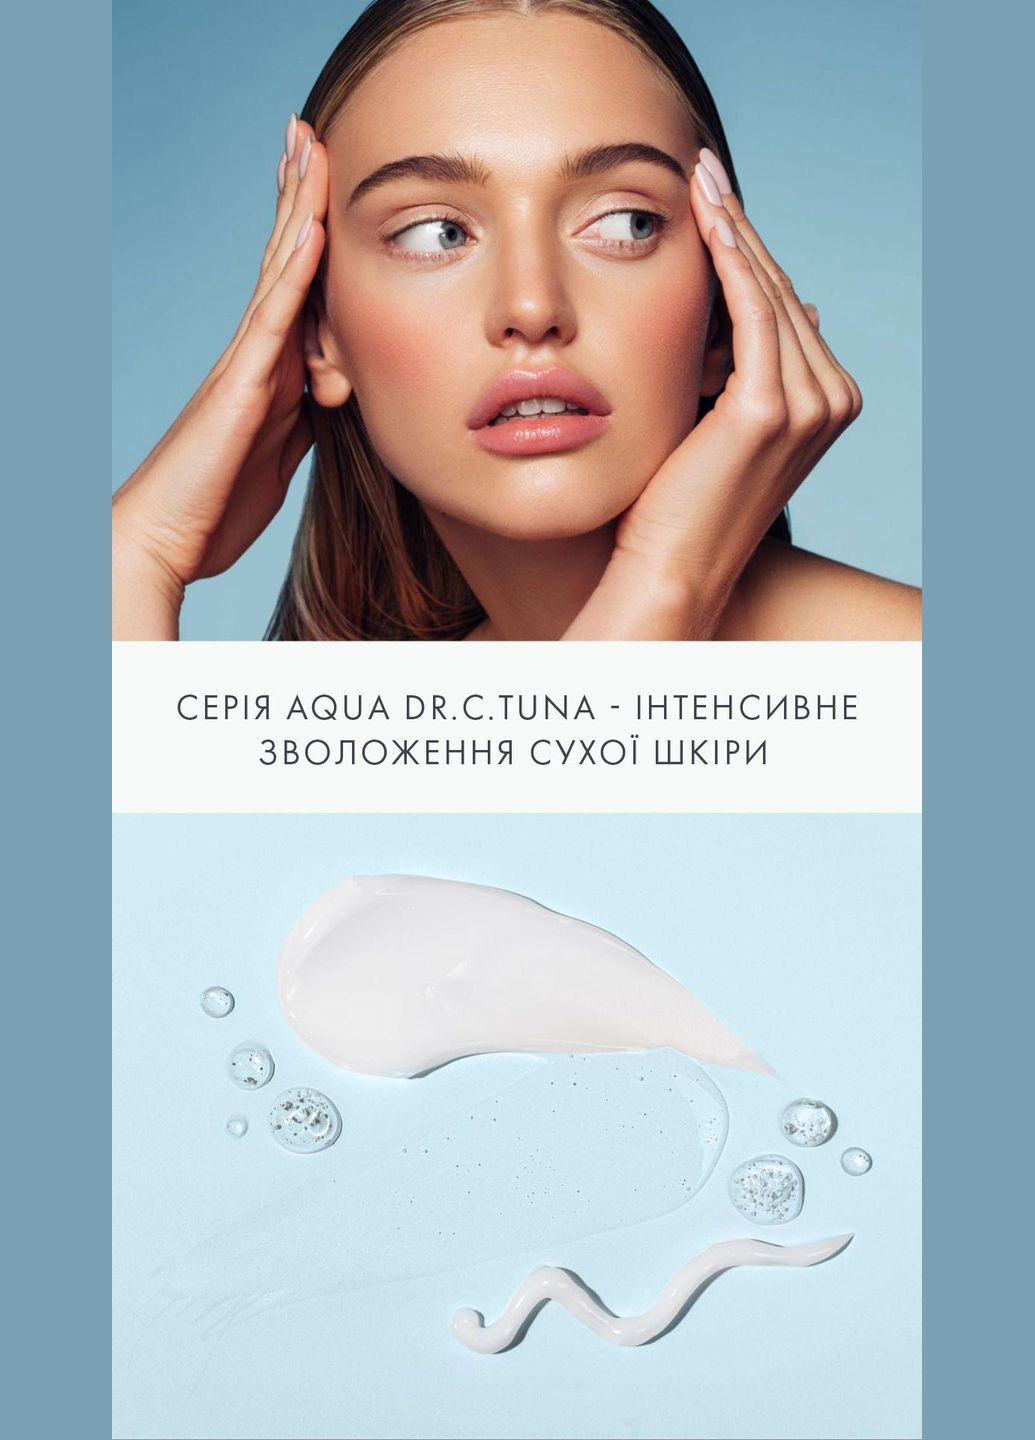 Одноразова тканинна маска Aqua Dr.C.Tuna 28 г Farmasi (294321266)